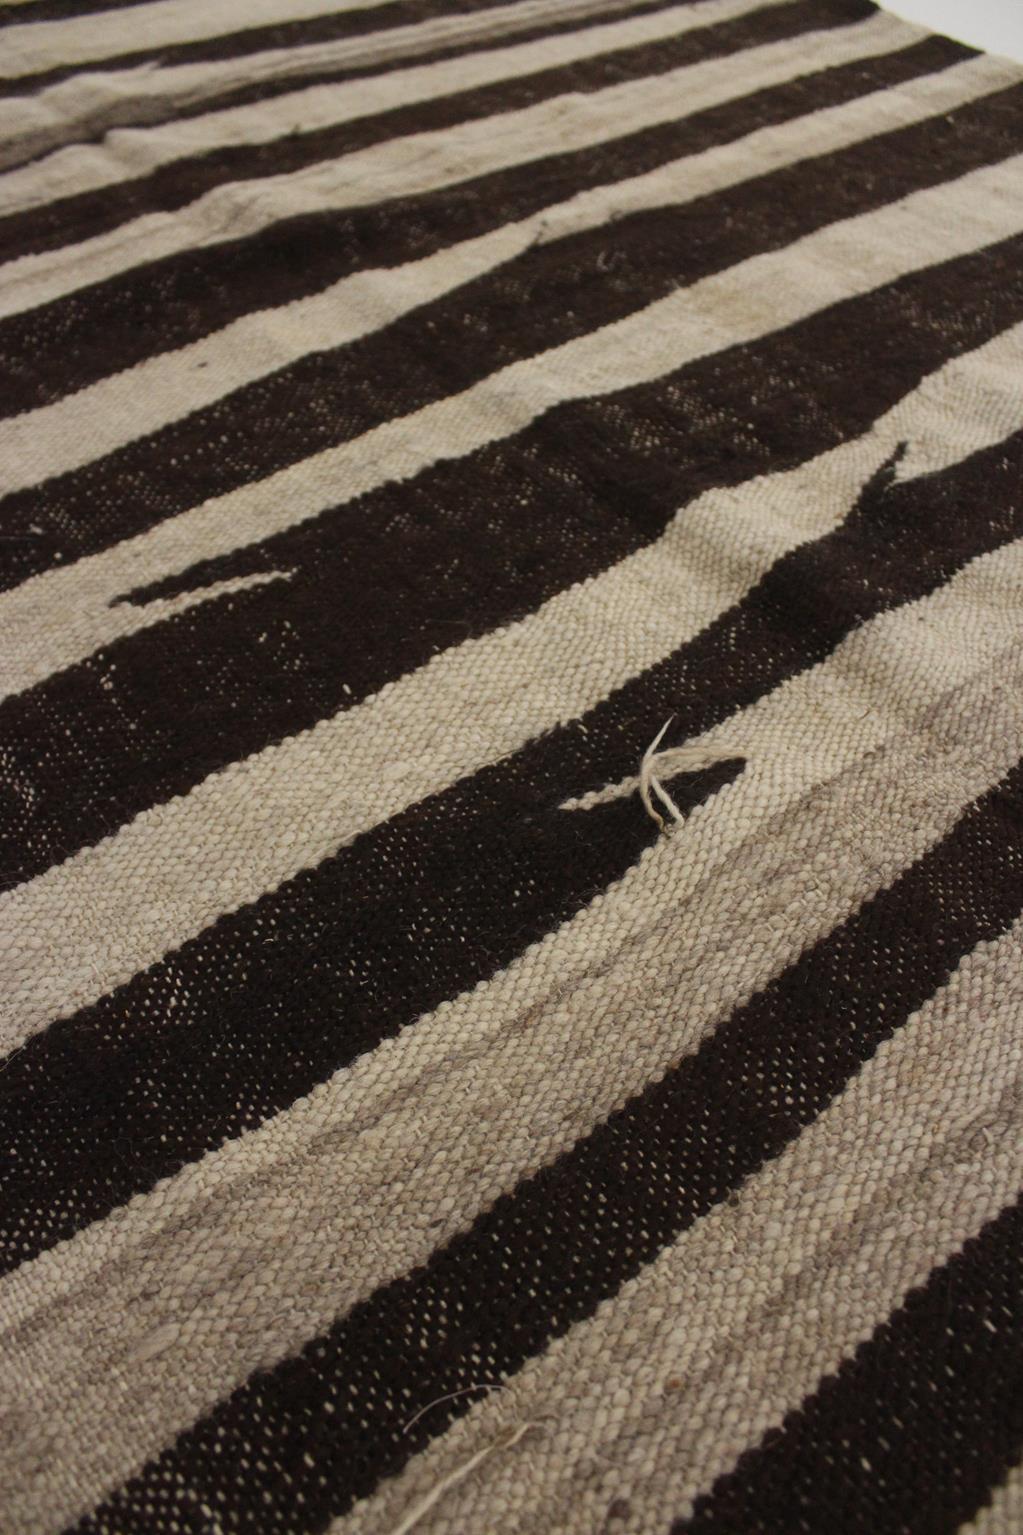 Vintage Moroccan Kilim rug - Stripes in beige+brown - 4.6x14.4feet / 142x440cm For Sale 2